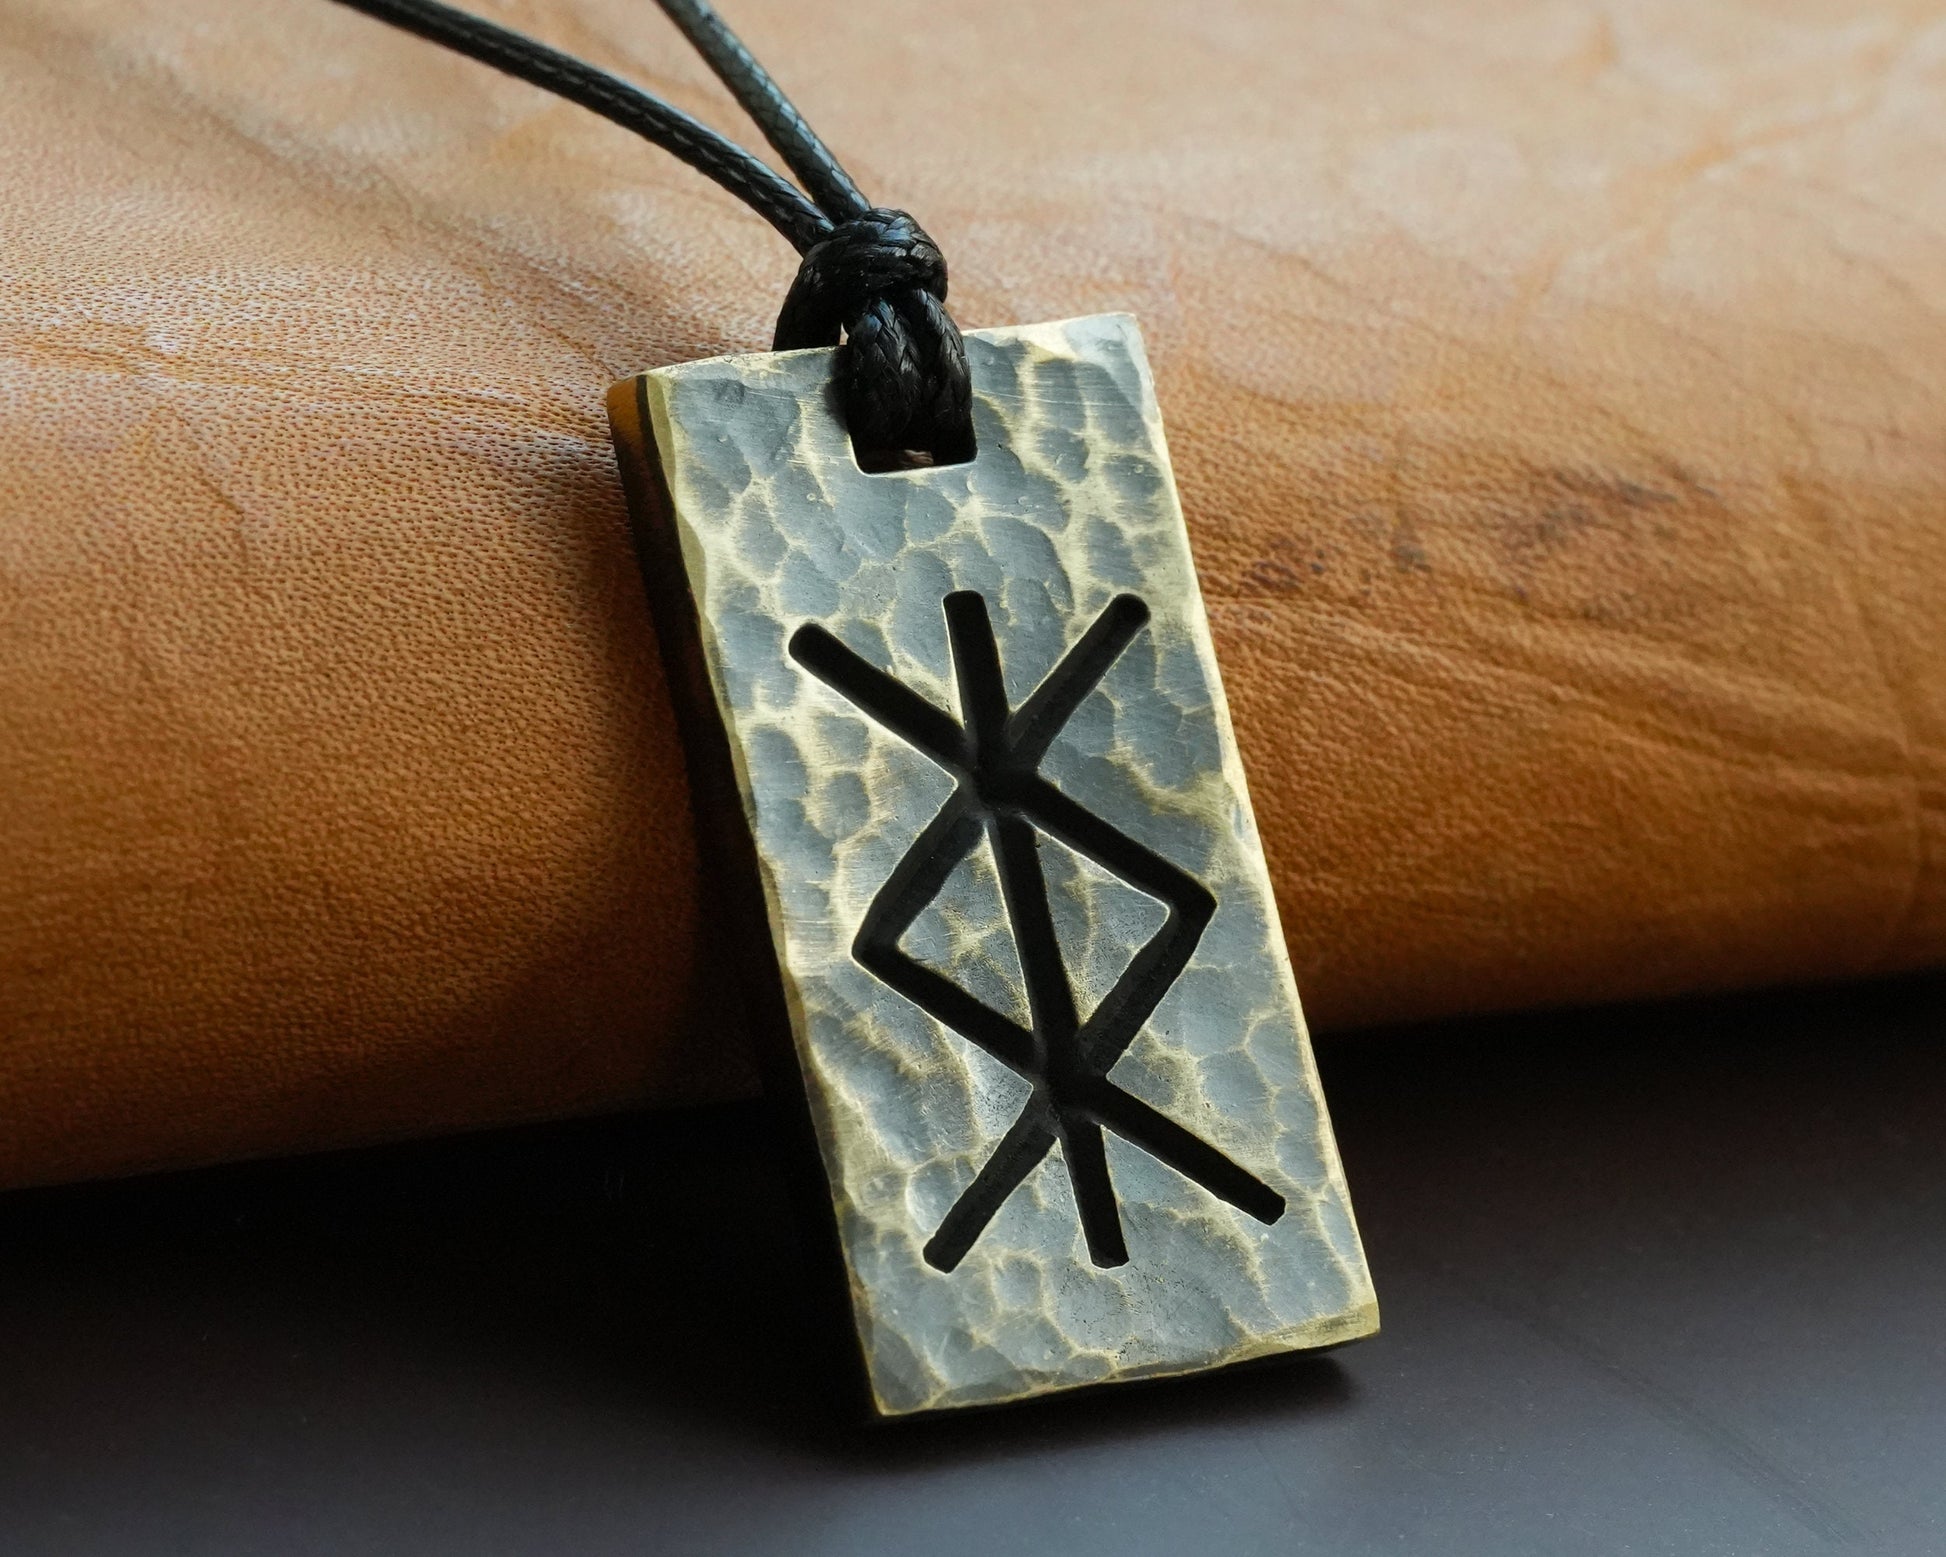 Bind Rune Protection Necklace Viking Elder Futhark Celtic Norse Jewelry Runes Pendant Amulet - Baldur Jewelry